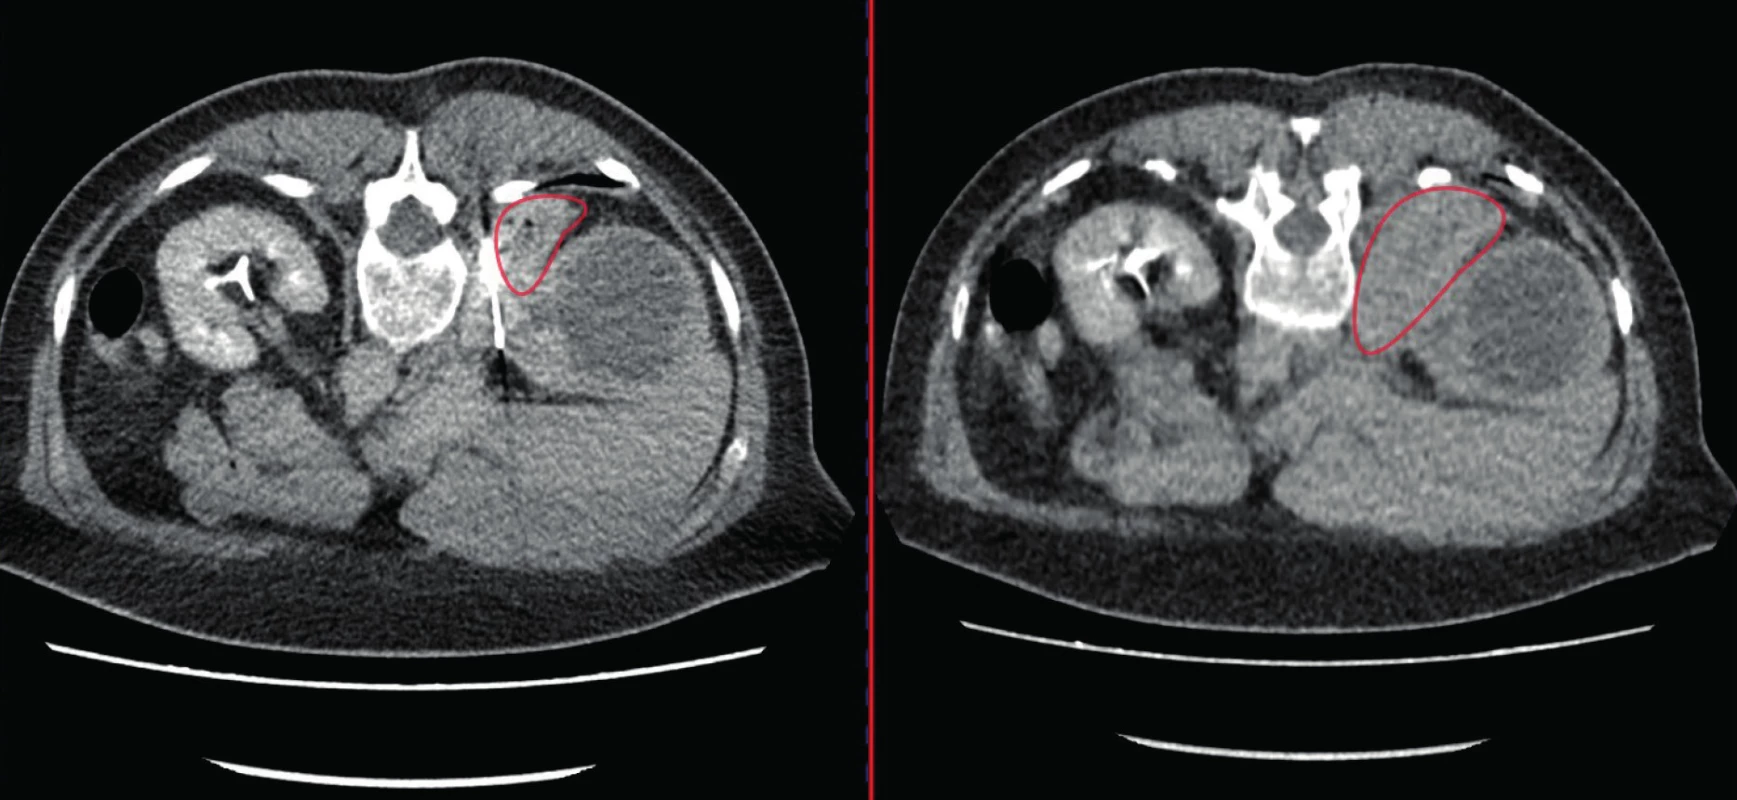 CT, transverzální řez; biopsie pravé ledviny komplikovaná hematomem; vlevo hematom v průběhu
biopsie, vpravo po dokončení biopsie<br>
Fig. 1. CT scan, transverse plane; the biopsy of the right kidney became complicated due to hematoma; in the
left picture – hematoma during the biopsy, in the right picture – hematoma after the biopsy